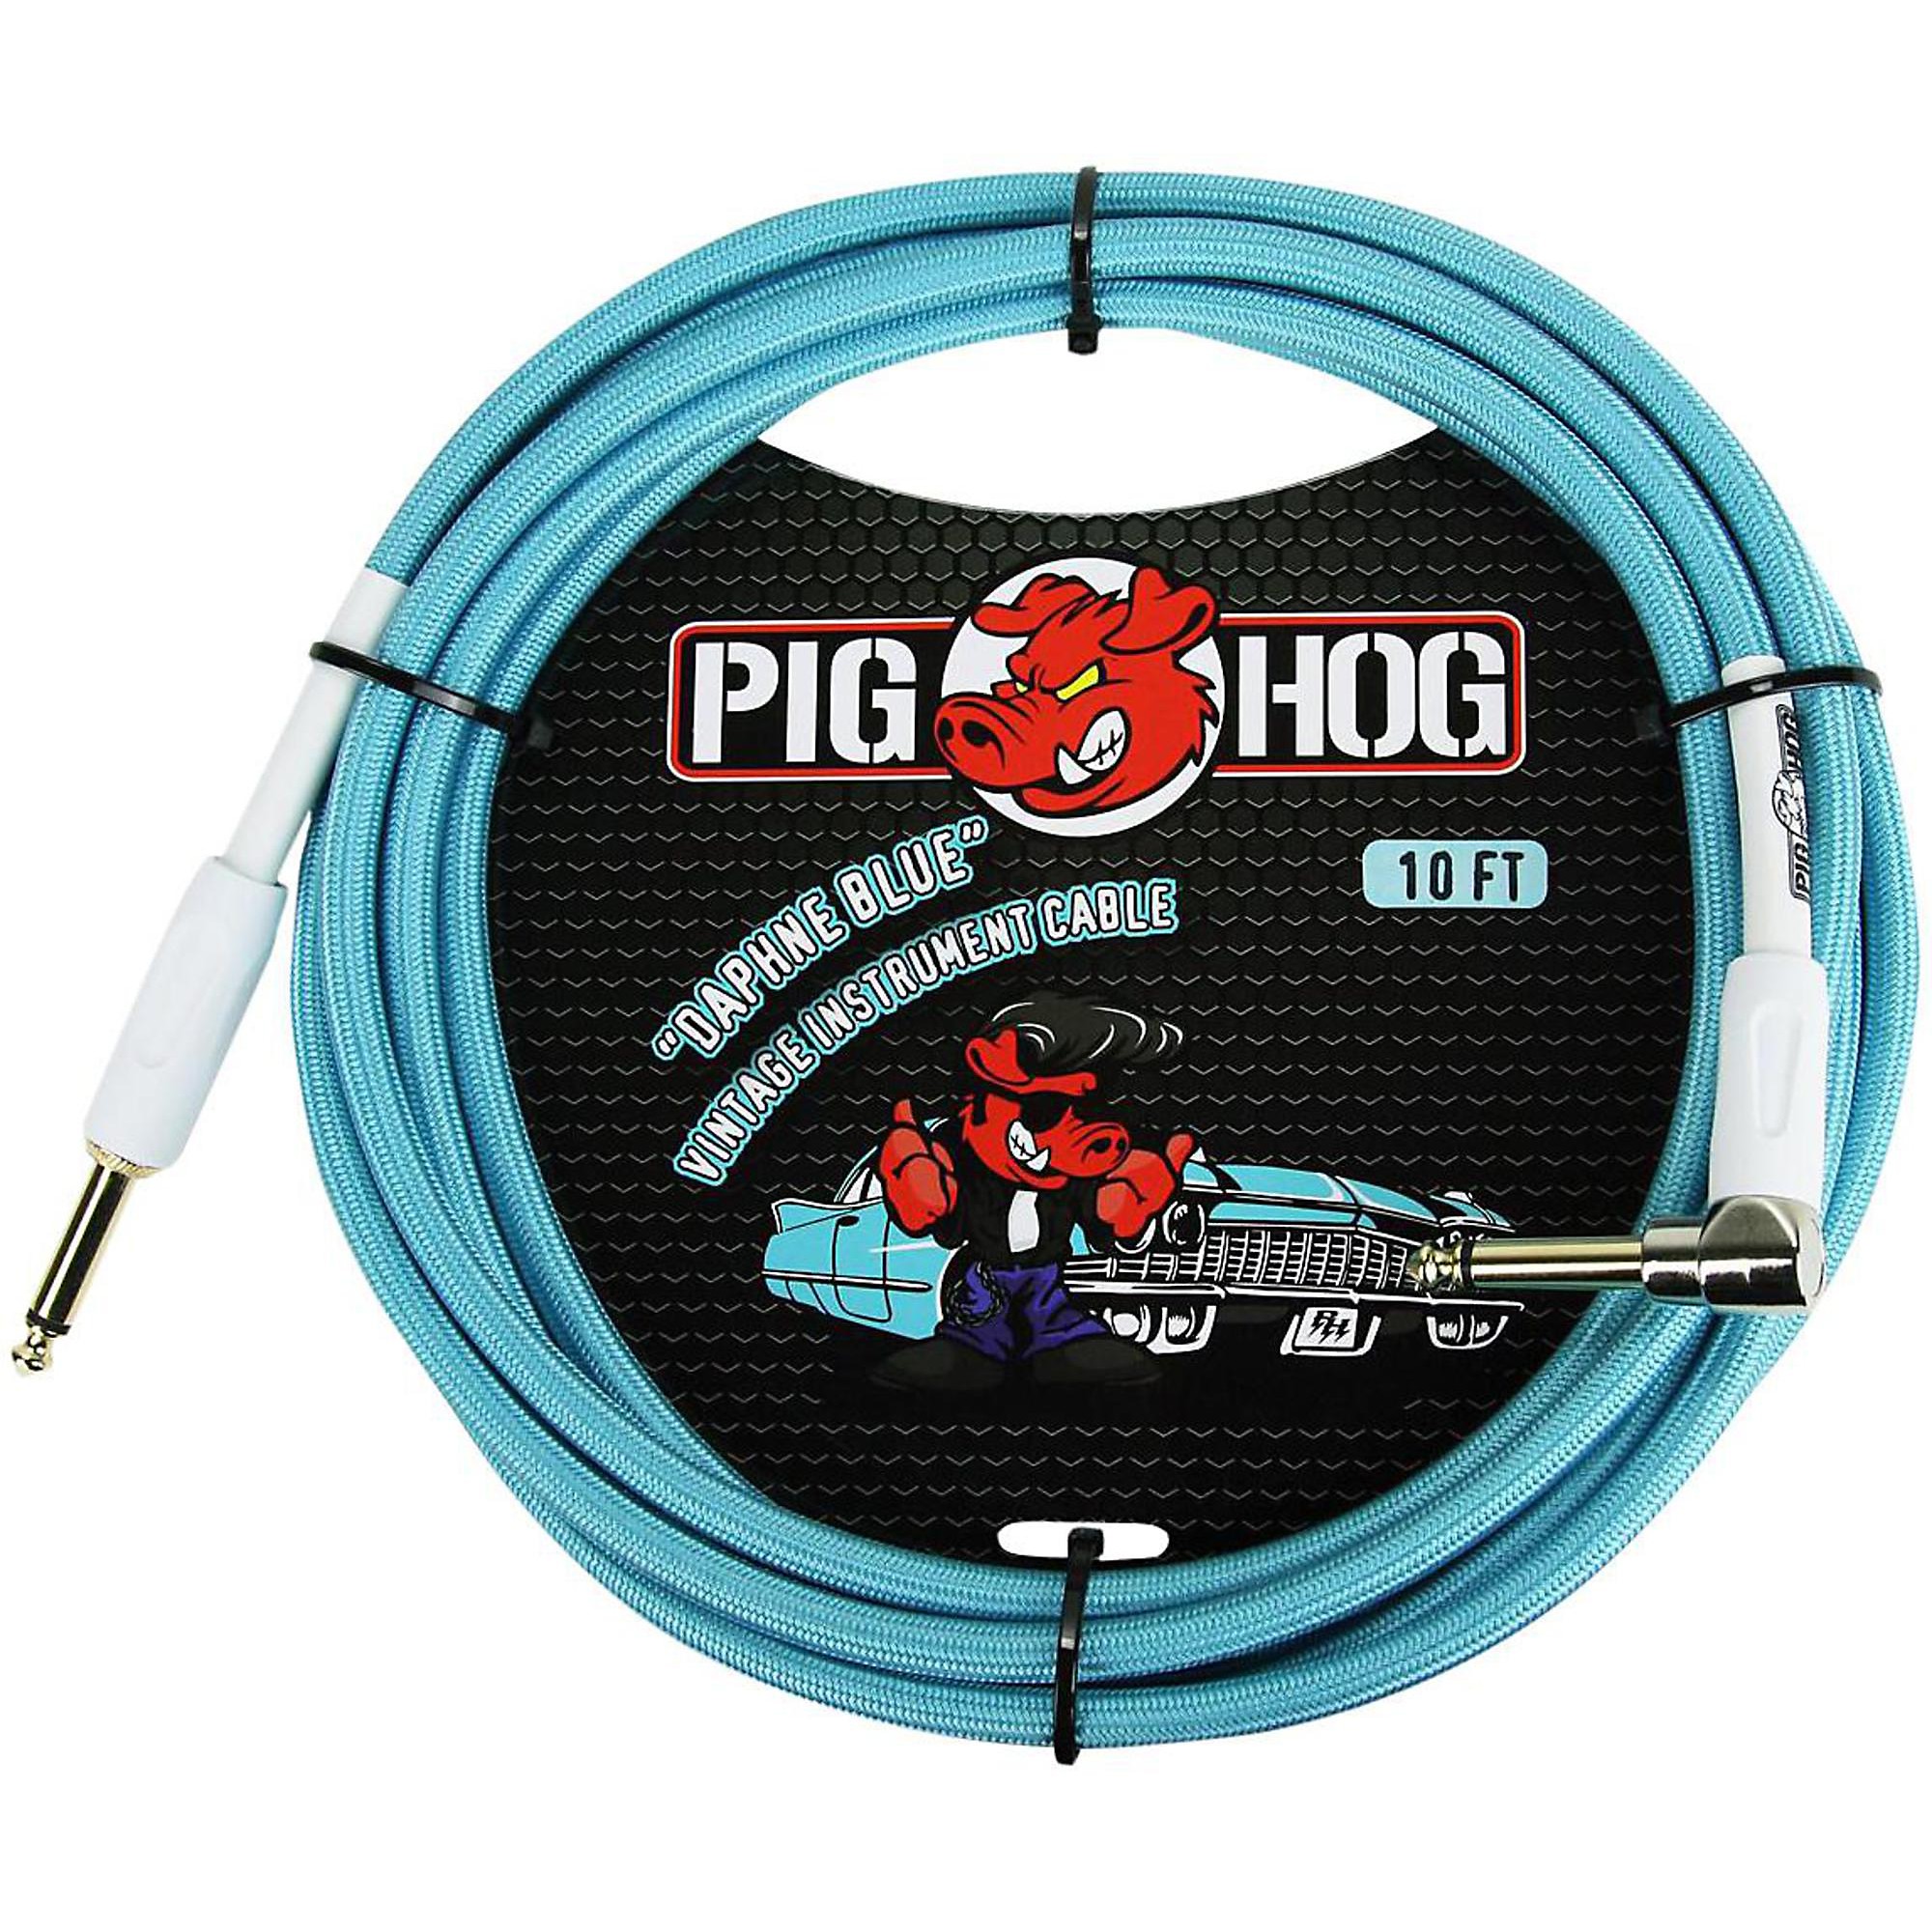 Pig Hog Speaker Cable 14 Gauge Wire 1/4 to 1/4 5 ft.